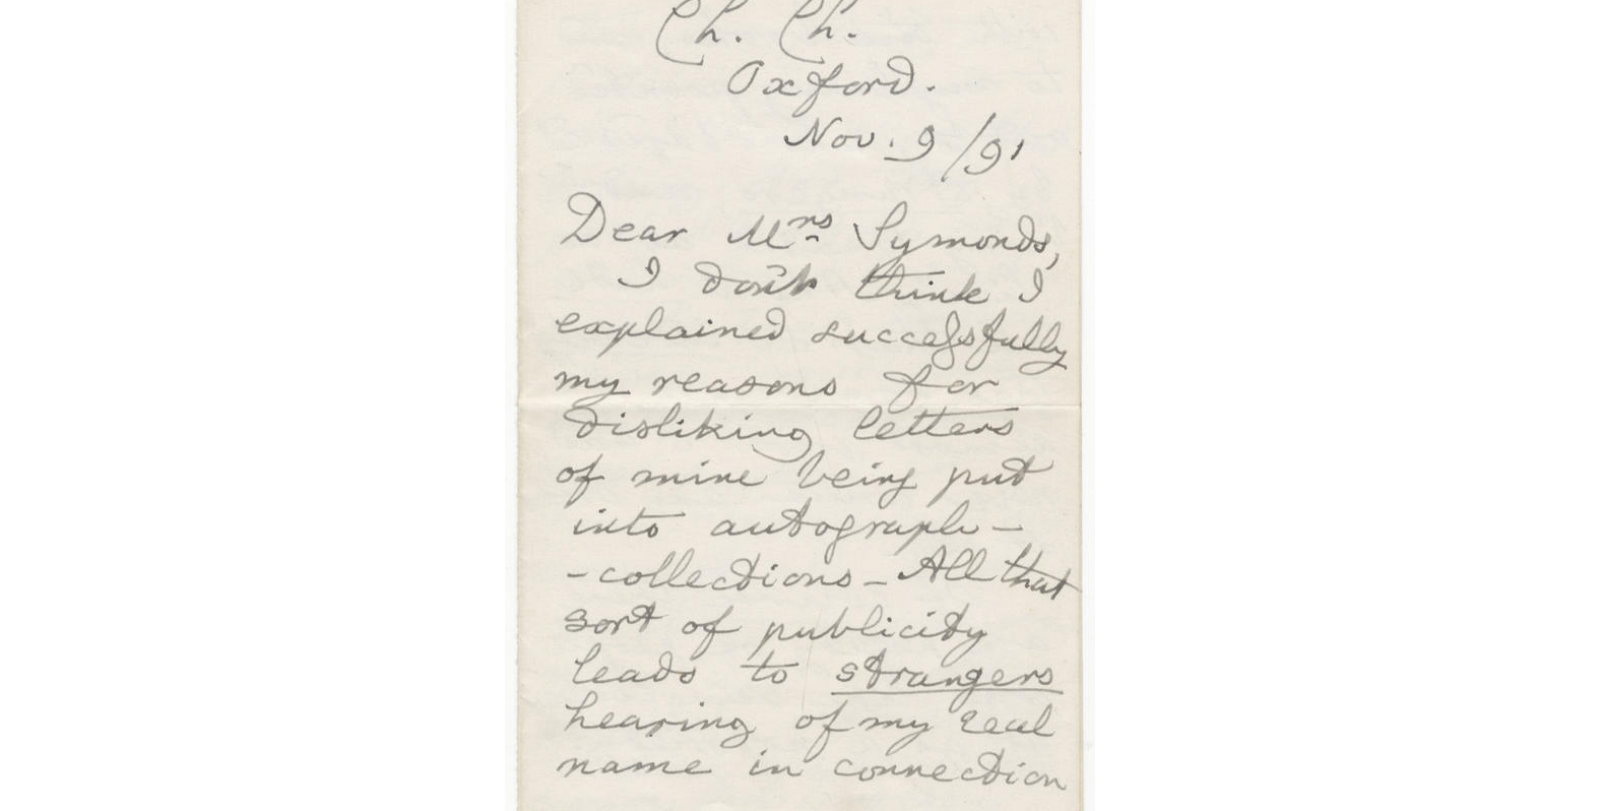 Fragmento de la carta de Lewis Carroll. (Bonhams)